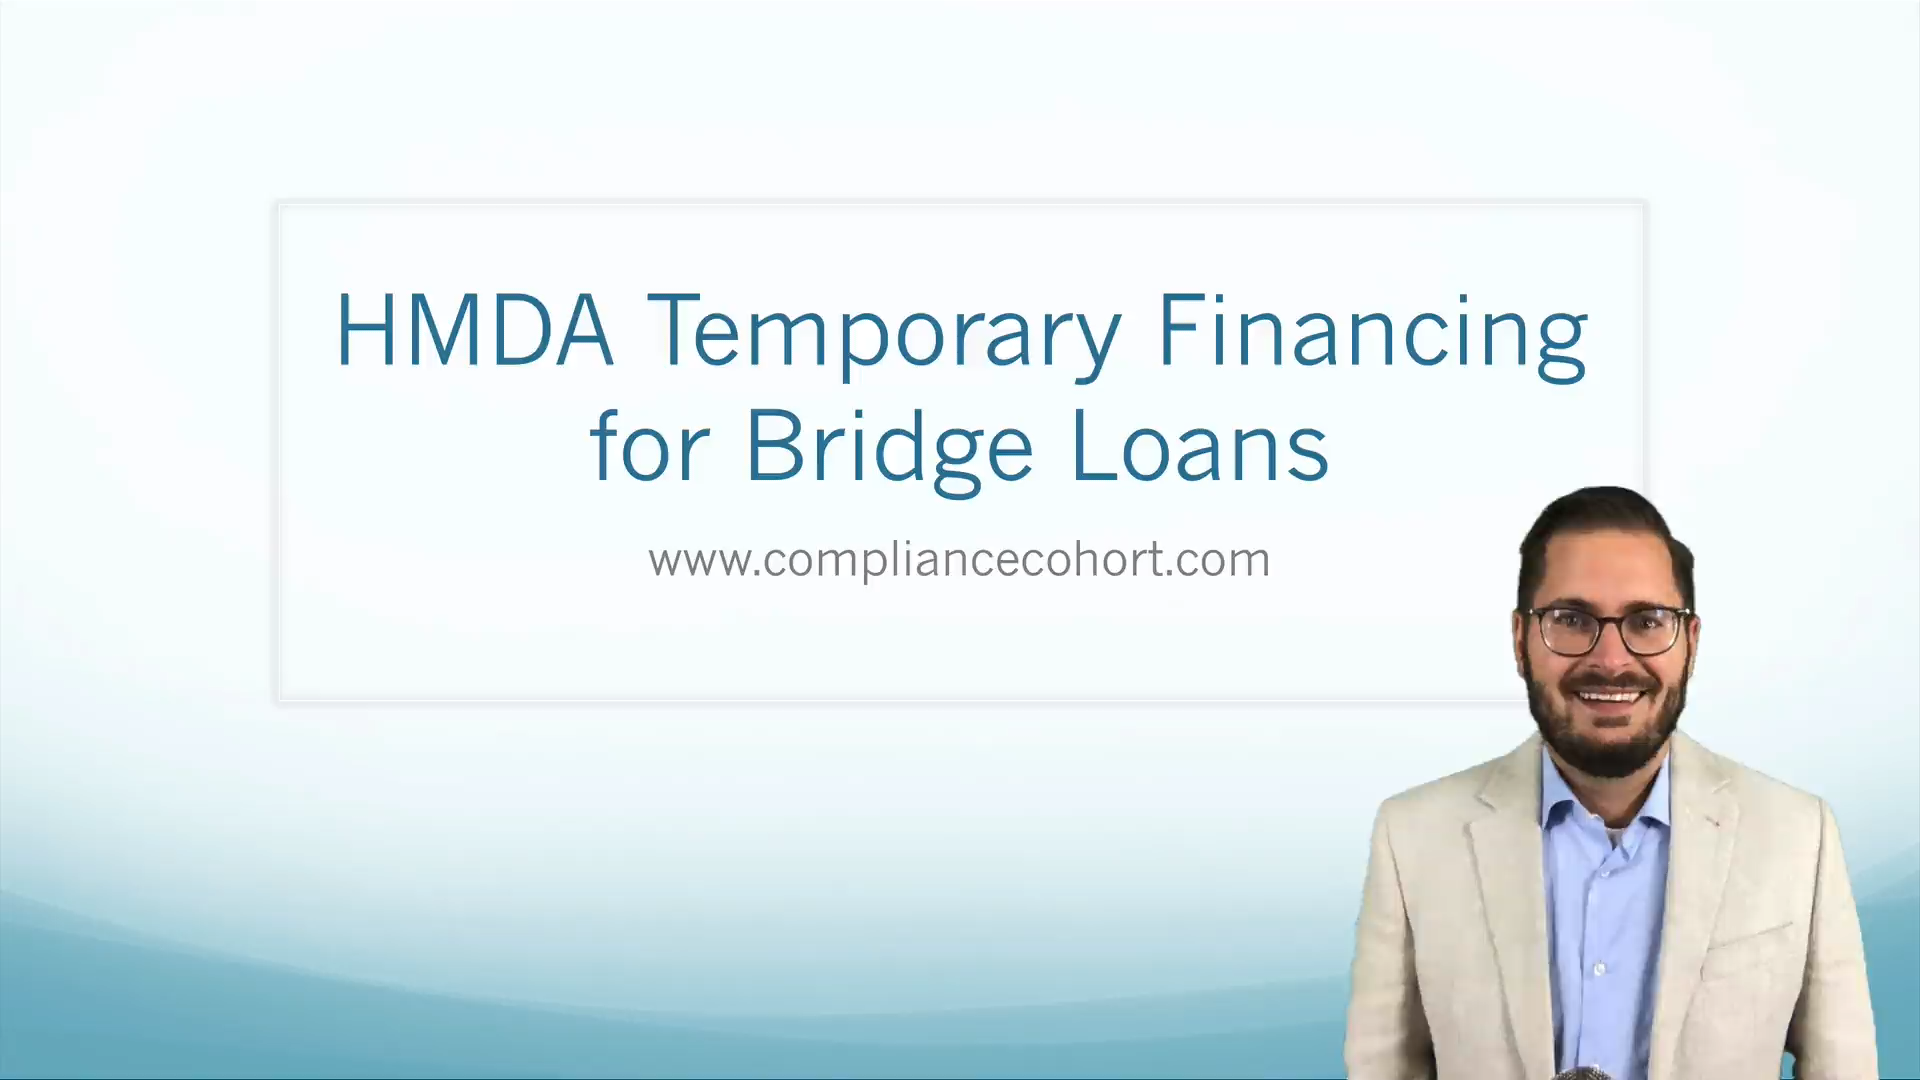 Bridge loans for temporary cash flow needs